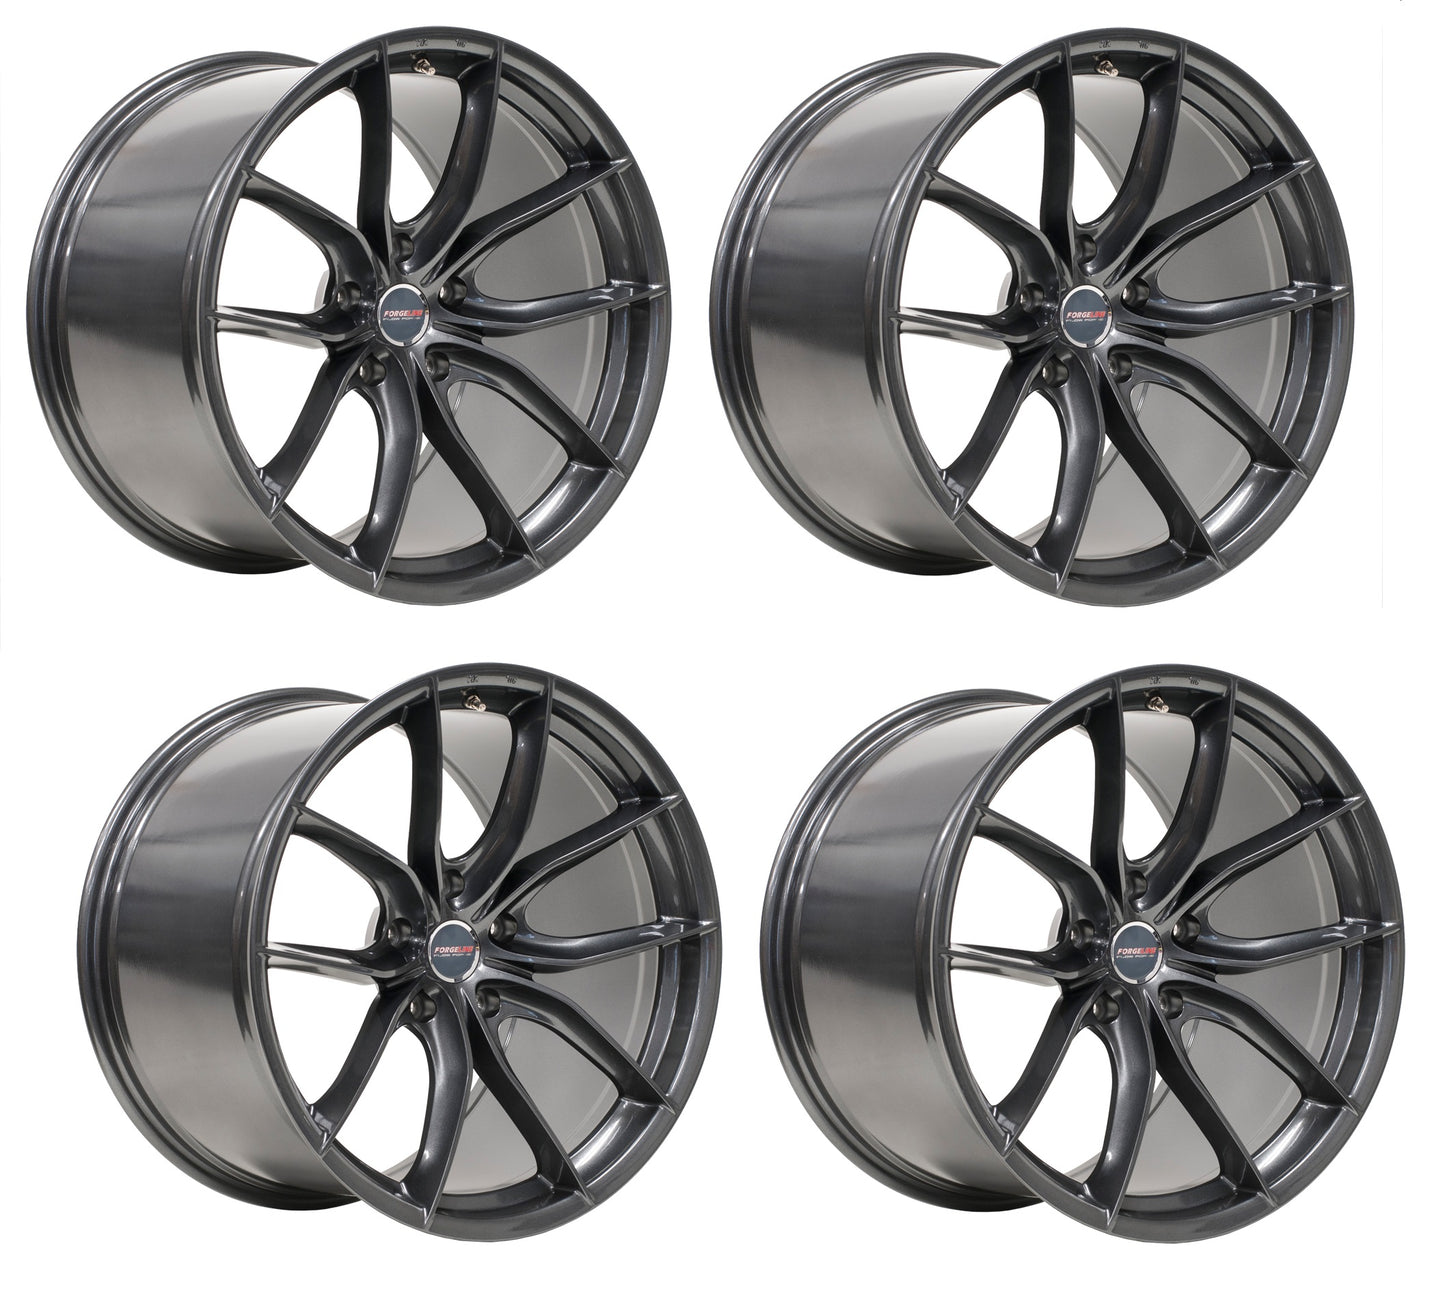 C8 Corvette Wheels: Forgeline F01 - Anthracite Gray (Set)